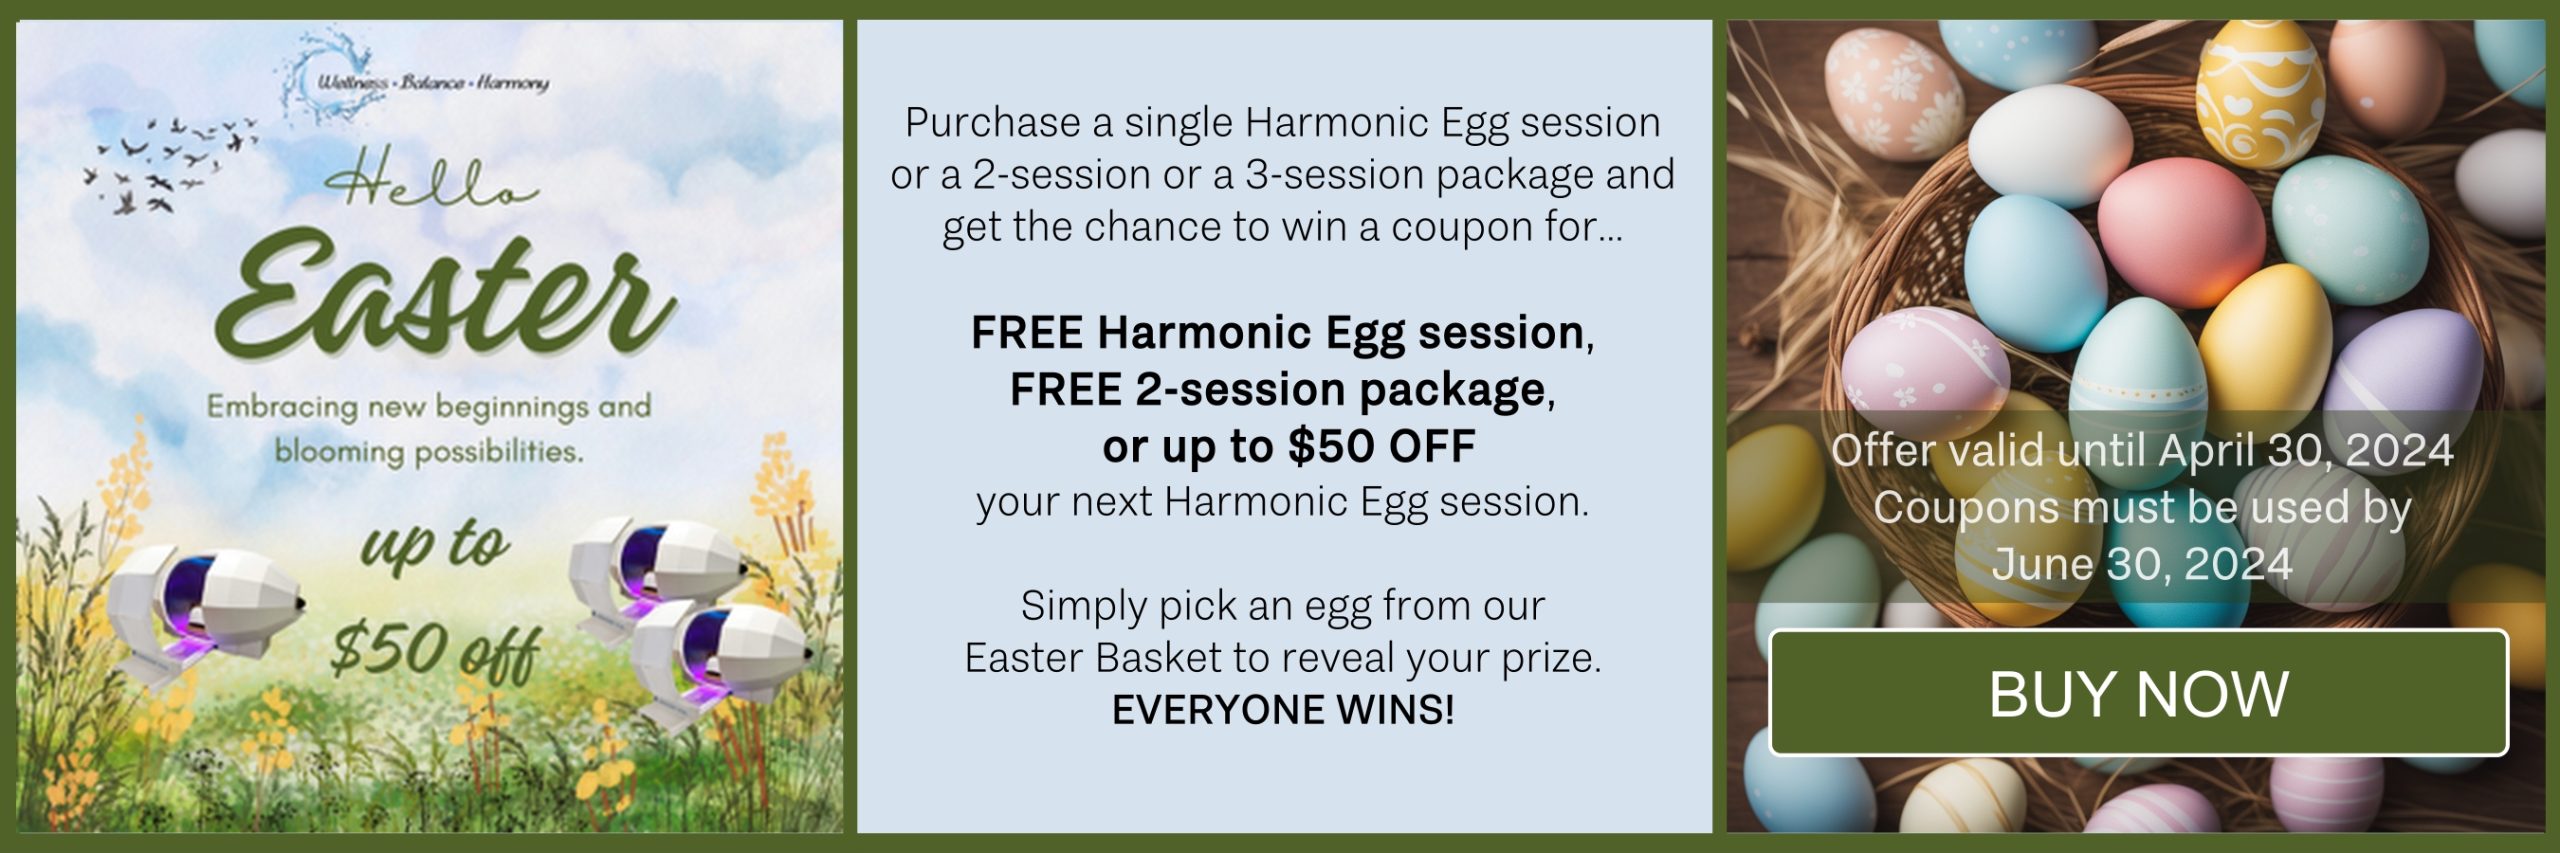 Harmonic Egg Easter Spring Give-Away by Wellness Balance Harmony